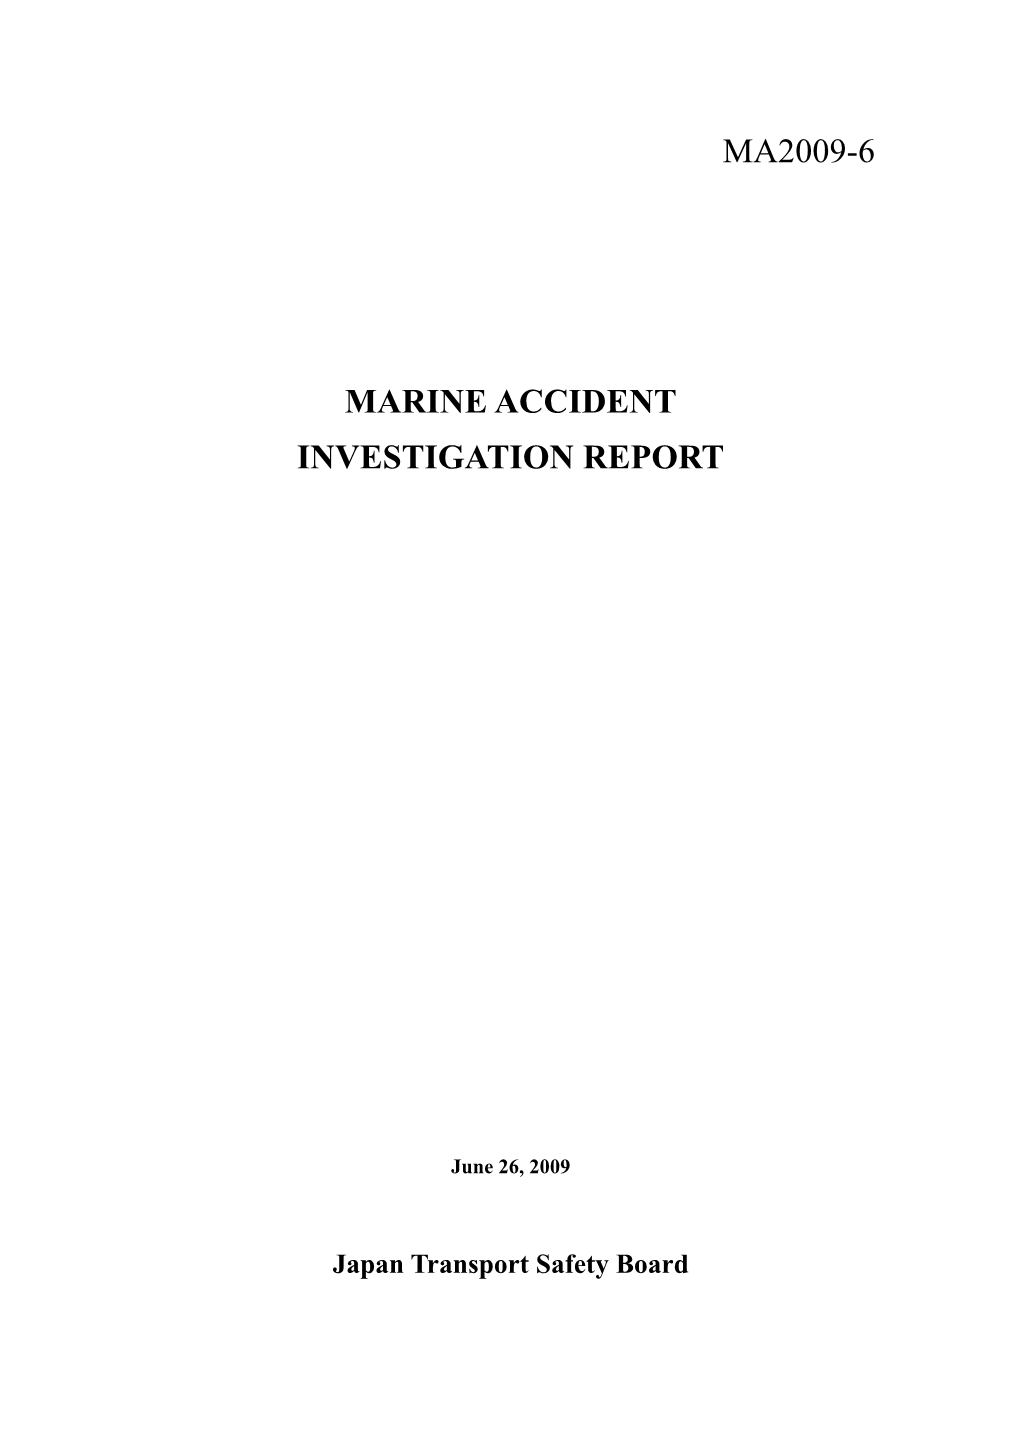 Ma2009-6 Marine Accident Investigation Report